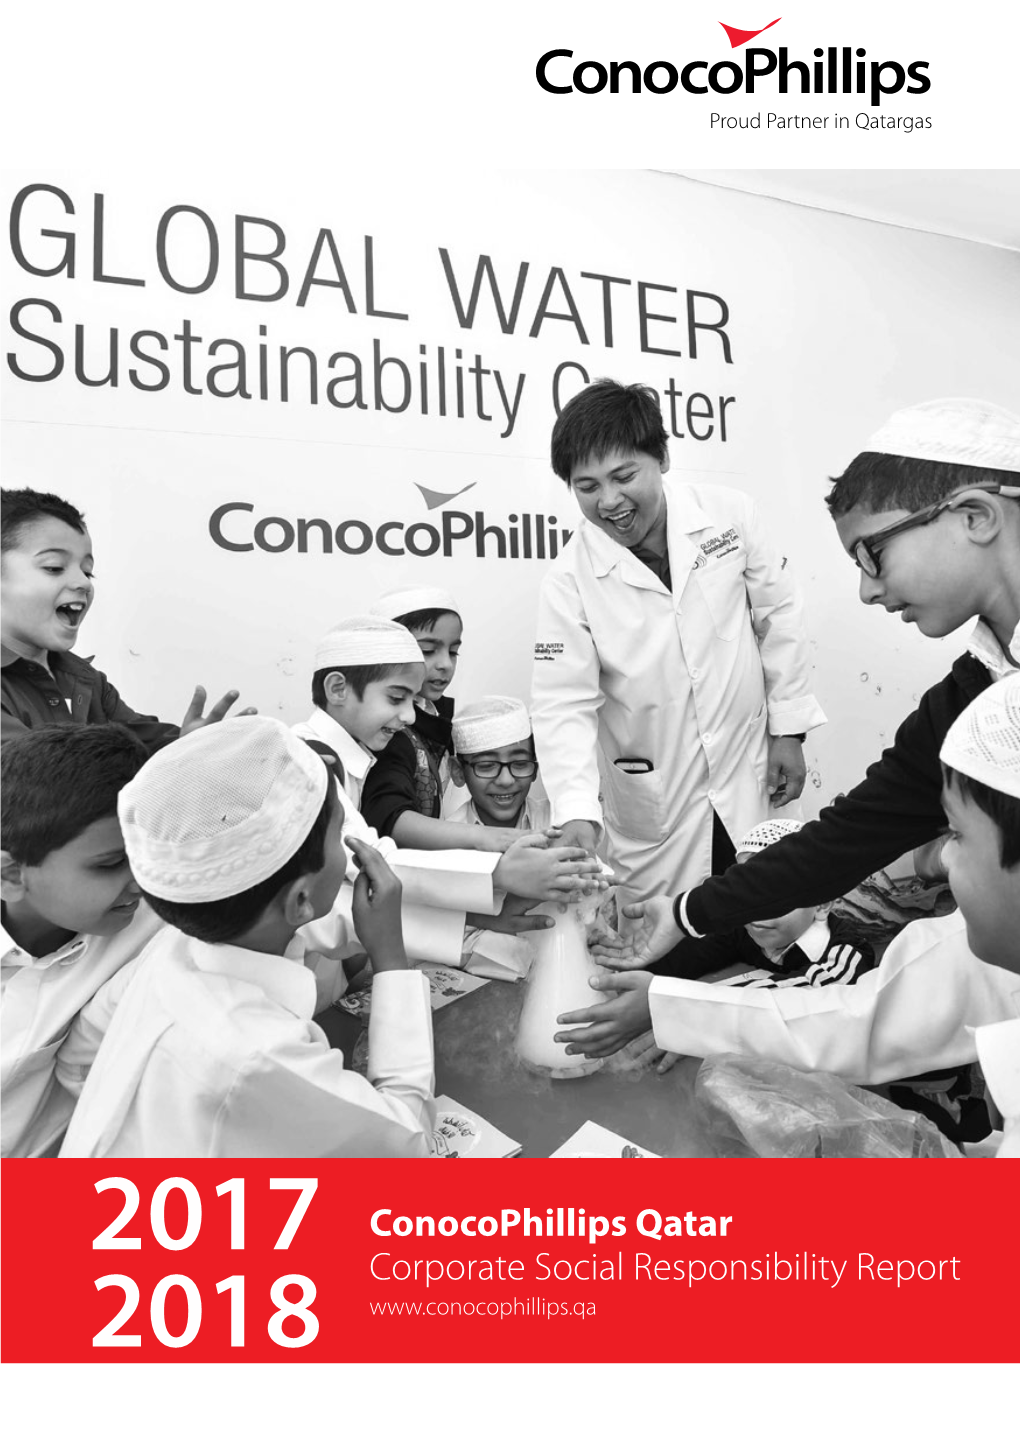 Conocophillips Qatar Corporate Social Responsibility Report